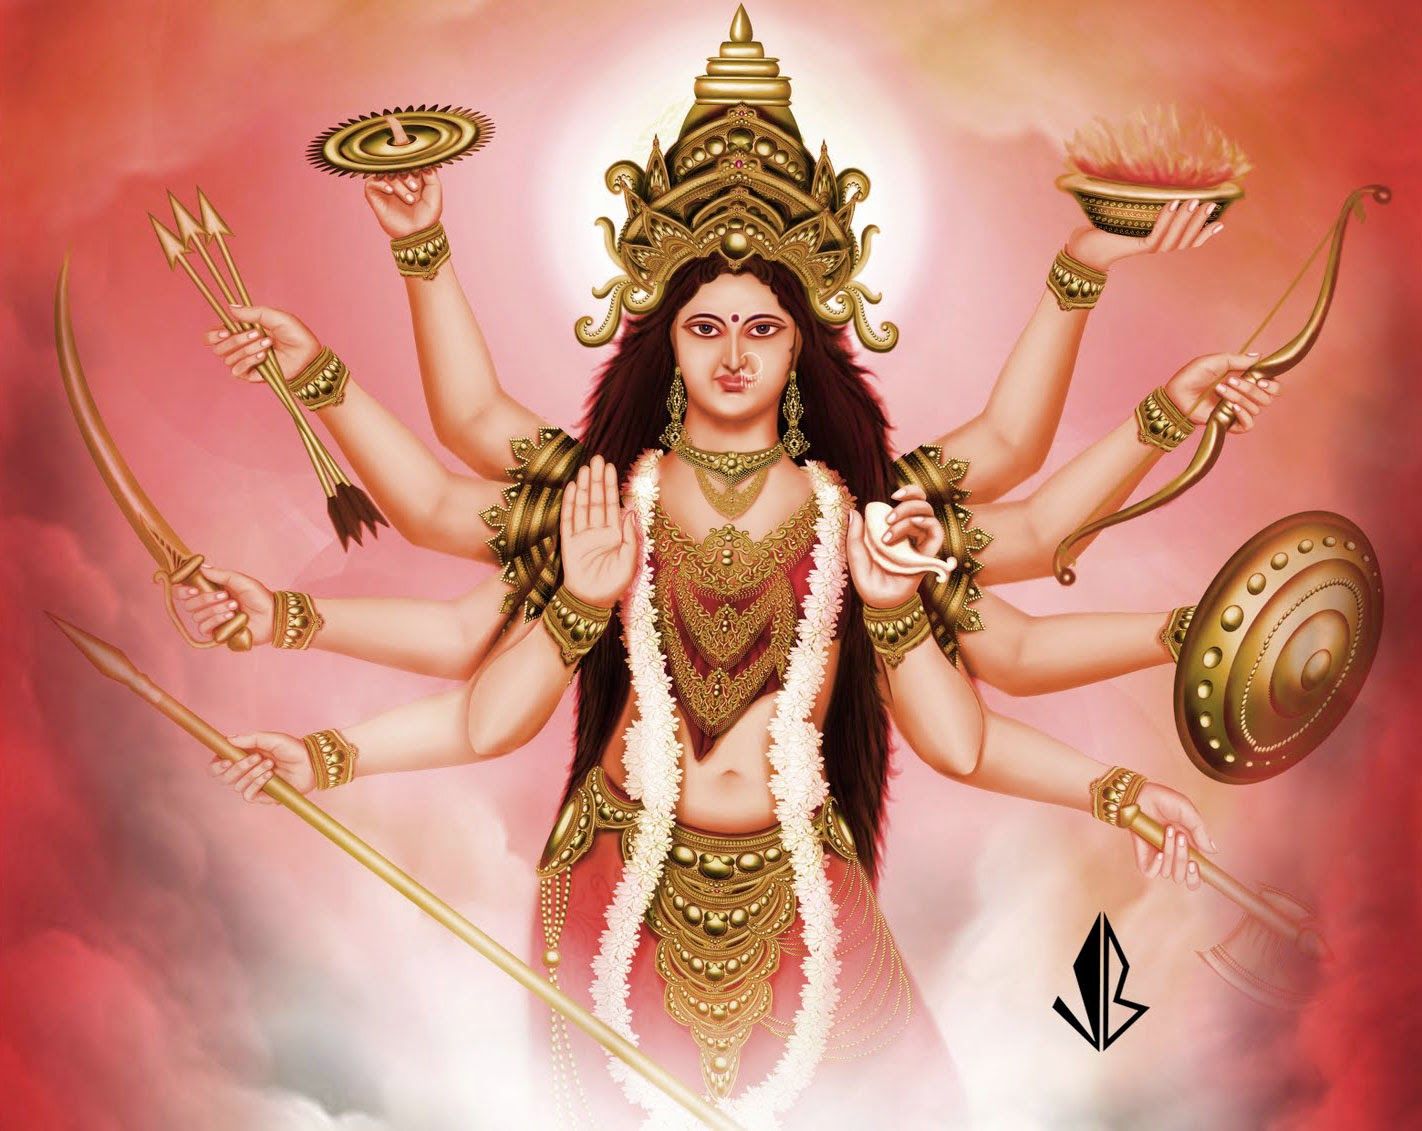 Goddess Kallika devi Shakthi Ammavaru HD Picture photo wallpaper Image Gallery Free Download. Hindu God Image